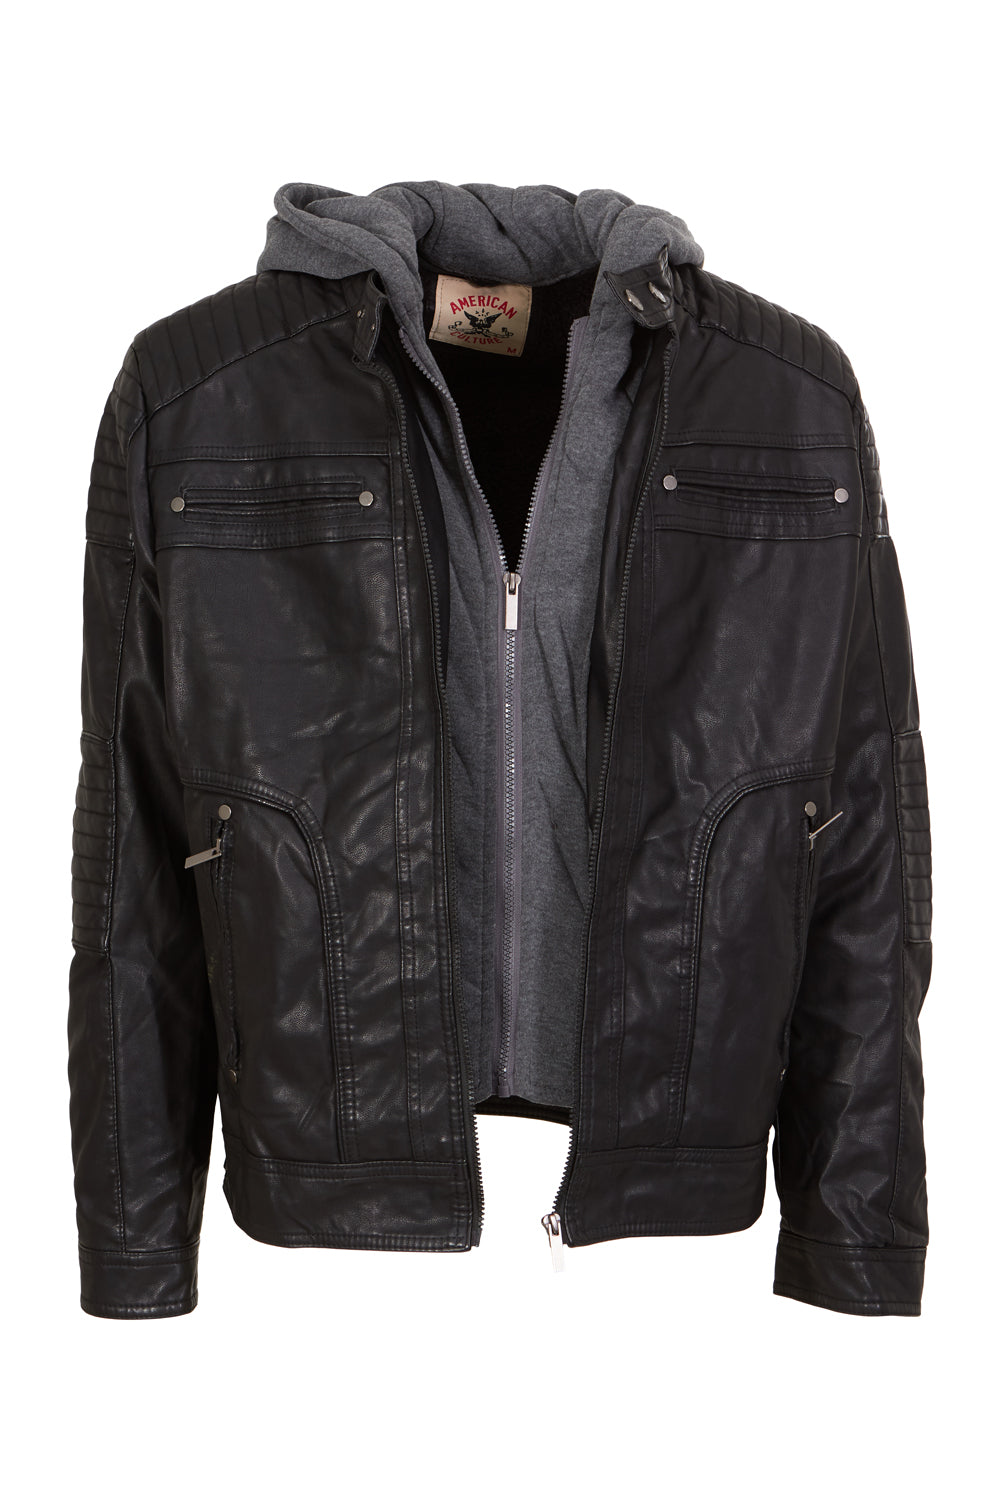 AE Vegan Leather Motorcycle Jacket